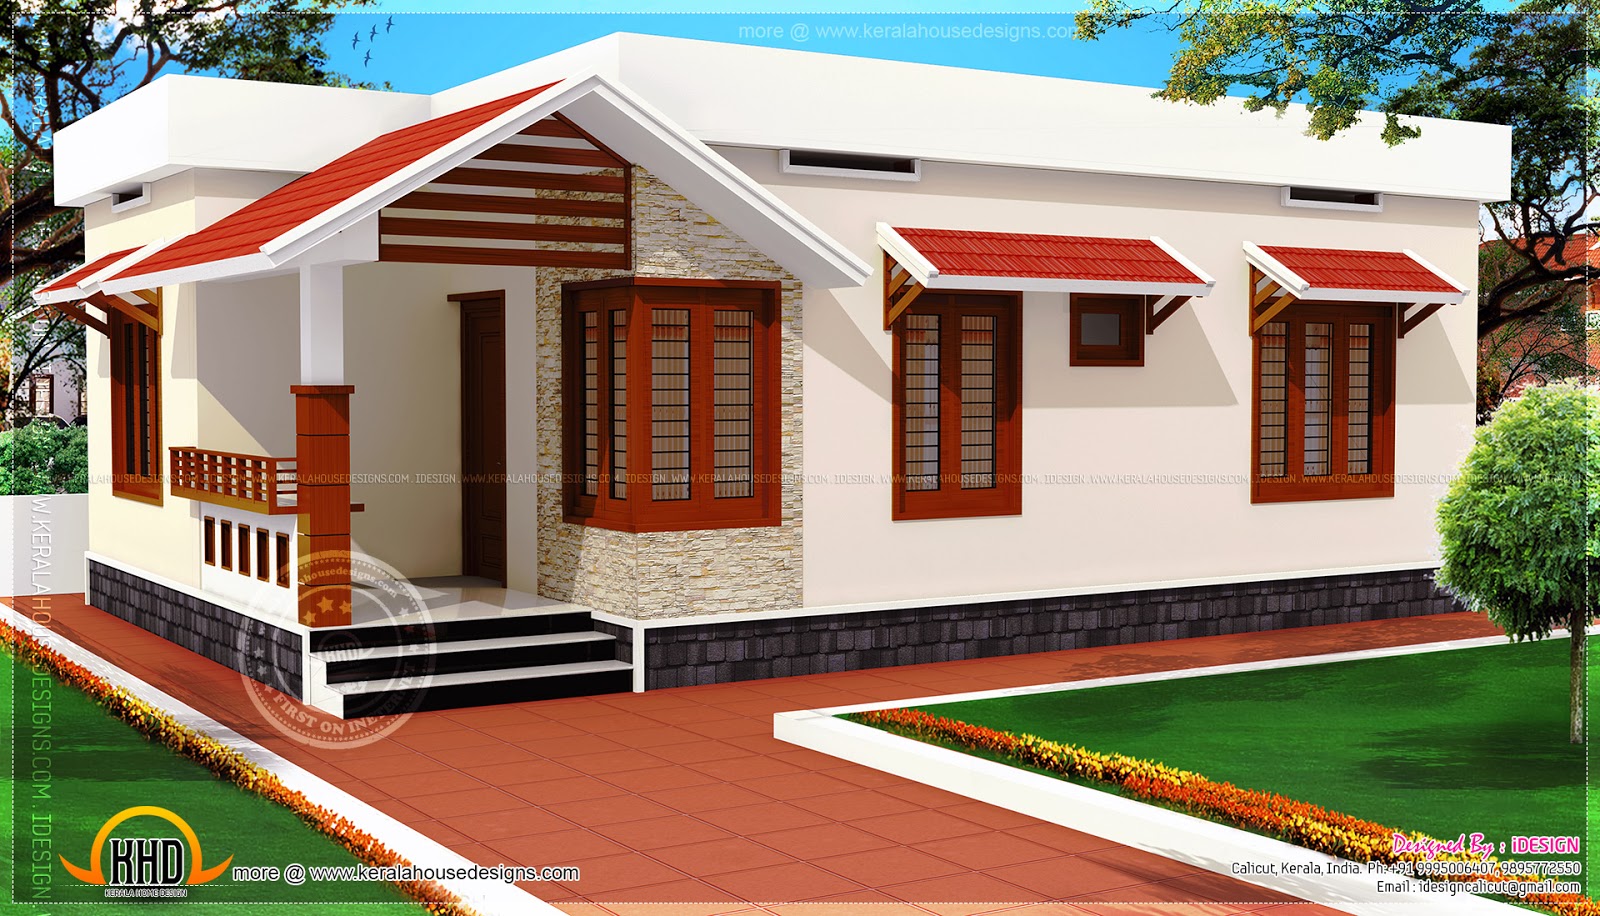 Low cost Kerala home design in 730 square feet - Kerala home ...